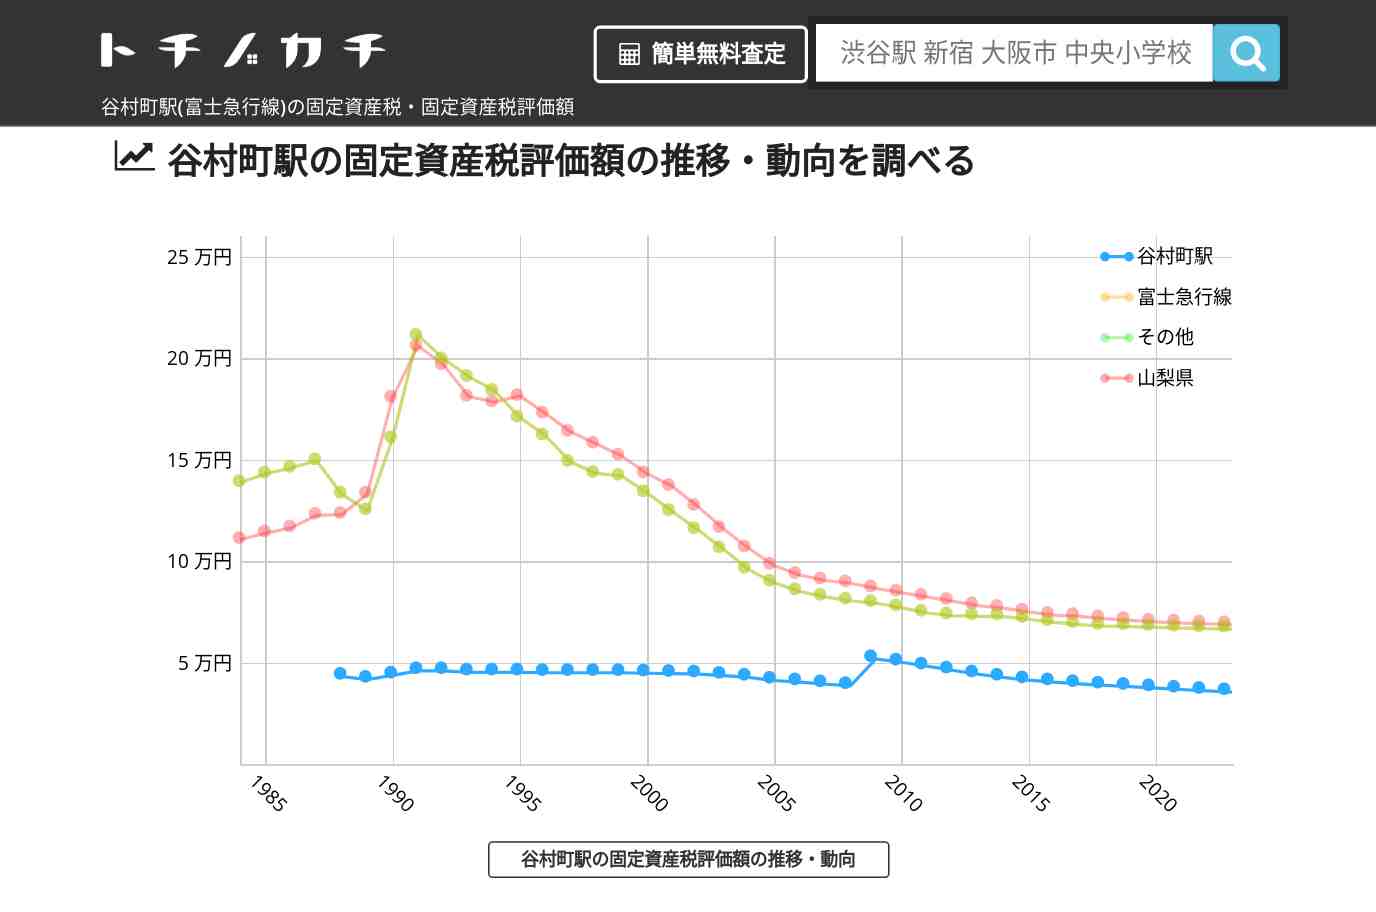 谷村町駅(富士急行線)の固定資産税・固定資産税評価額 | トチノカチ